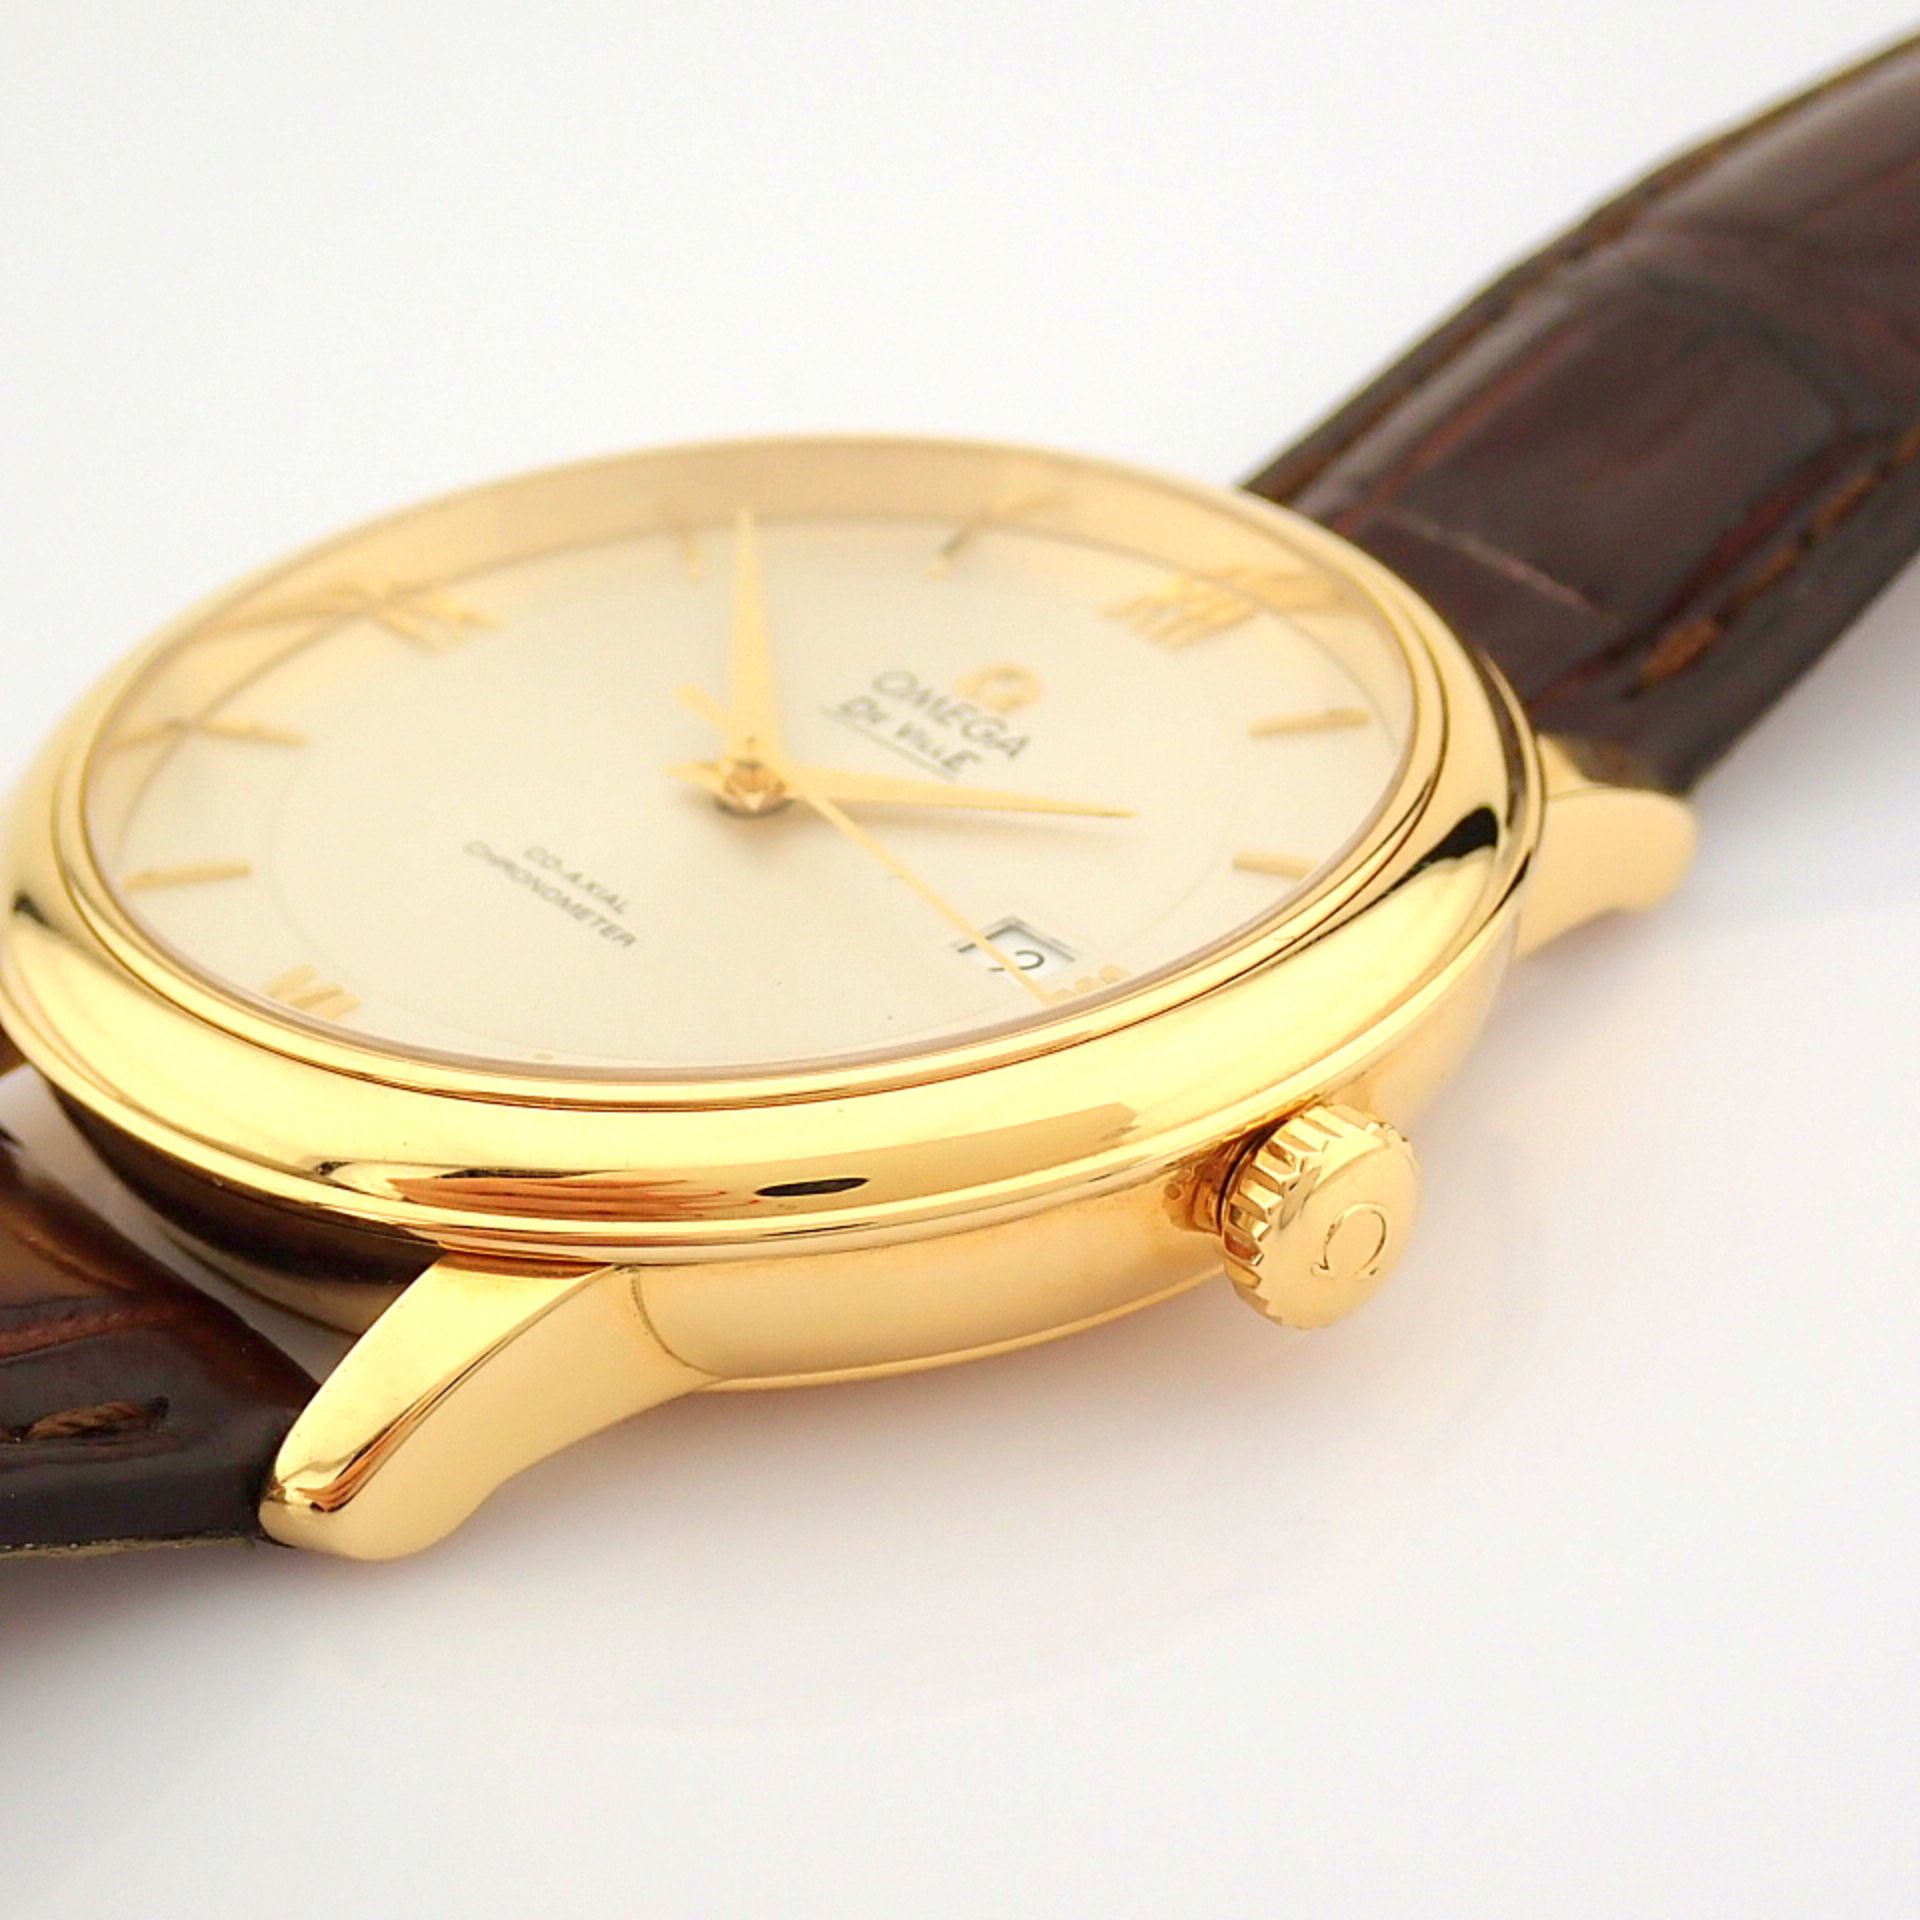 Omega / DE VILLE Prestige 18K Co-Axial Chronometer - Gentlmen's Yellow gold Wrist Watch - Image 8 of 13